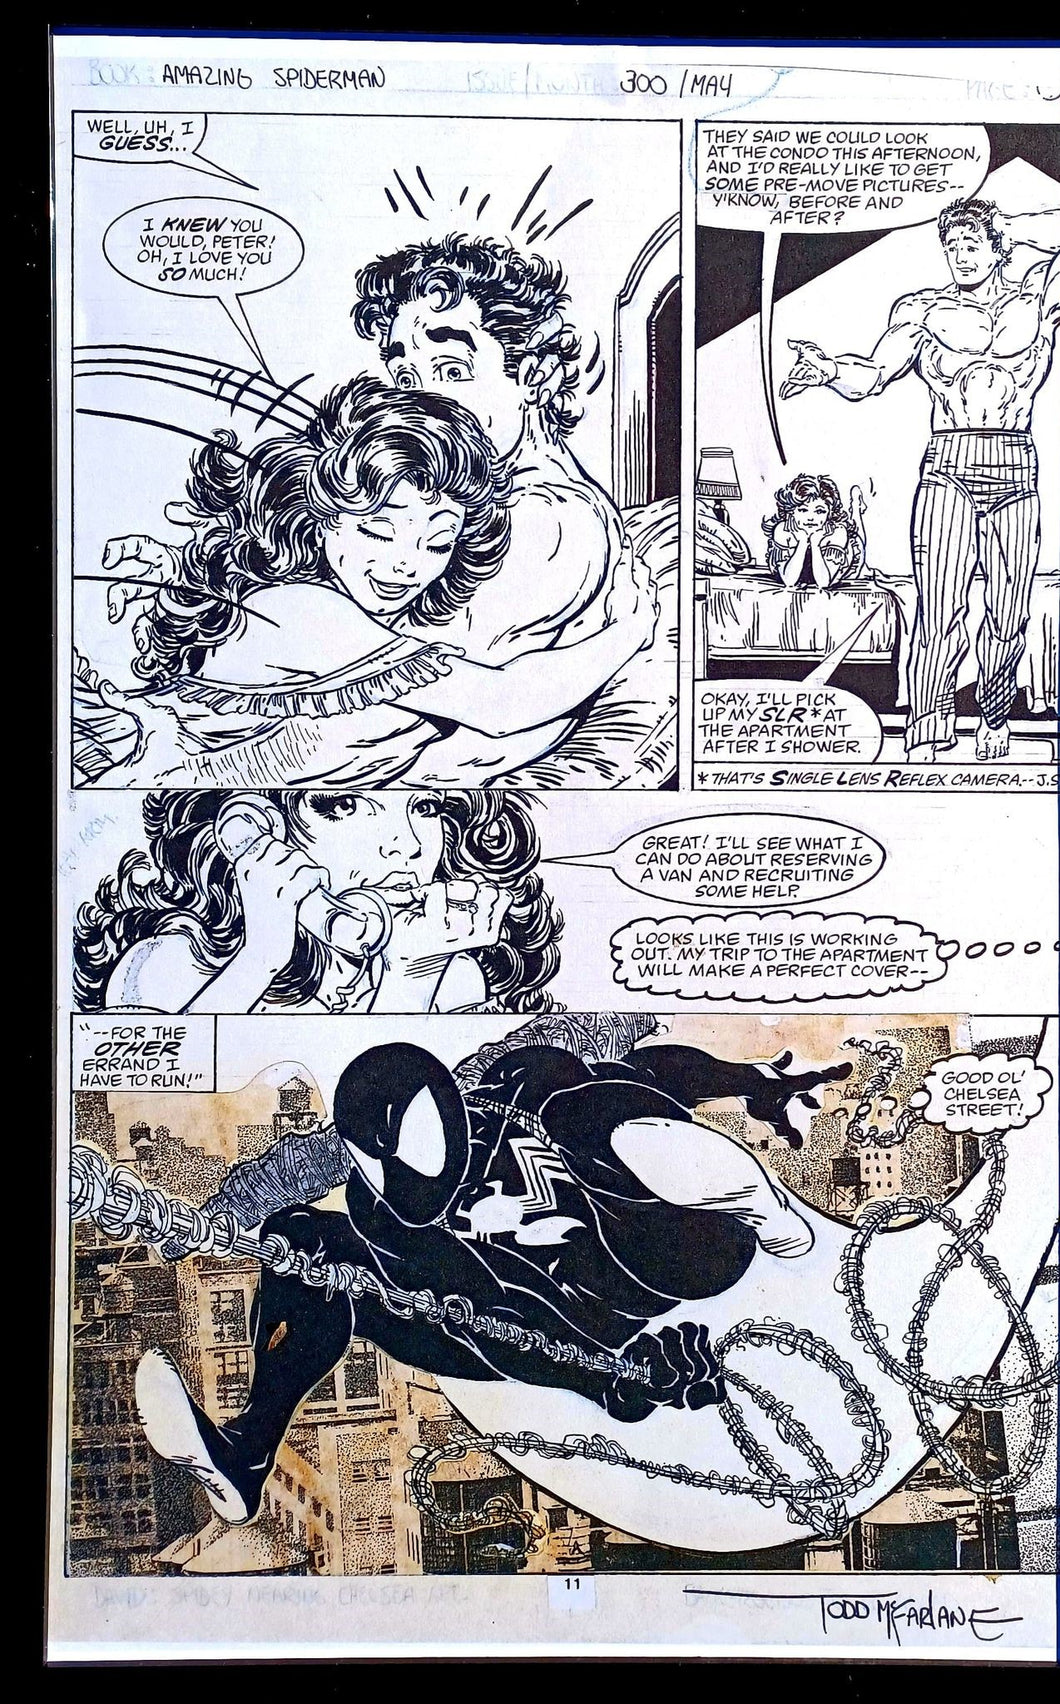 Amazing Spider-Man #300 pg. 8 by Todd McFarlane 11x17 FRAMED Original Art Print Comic Poster